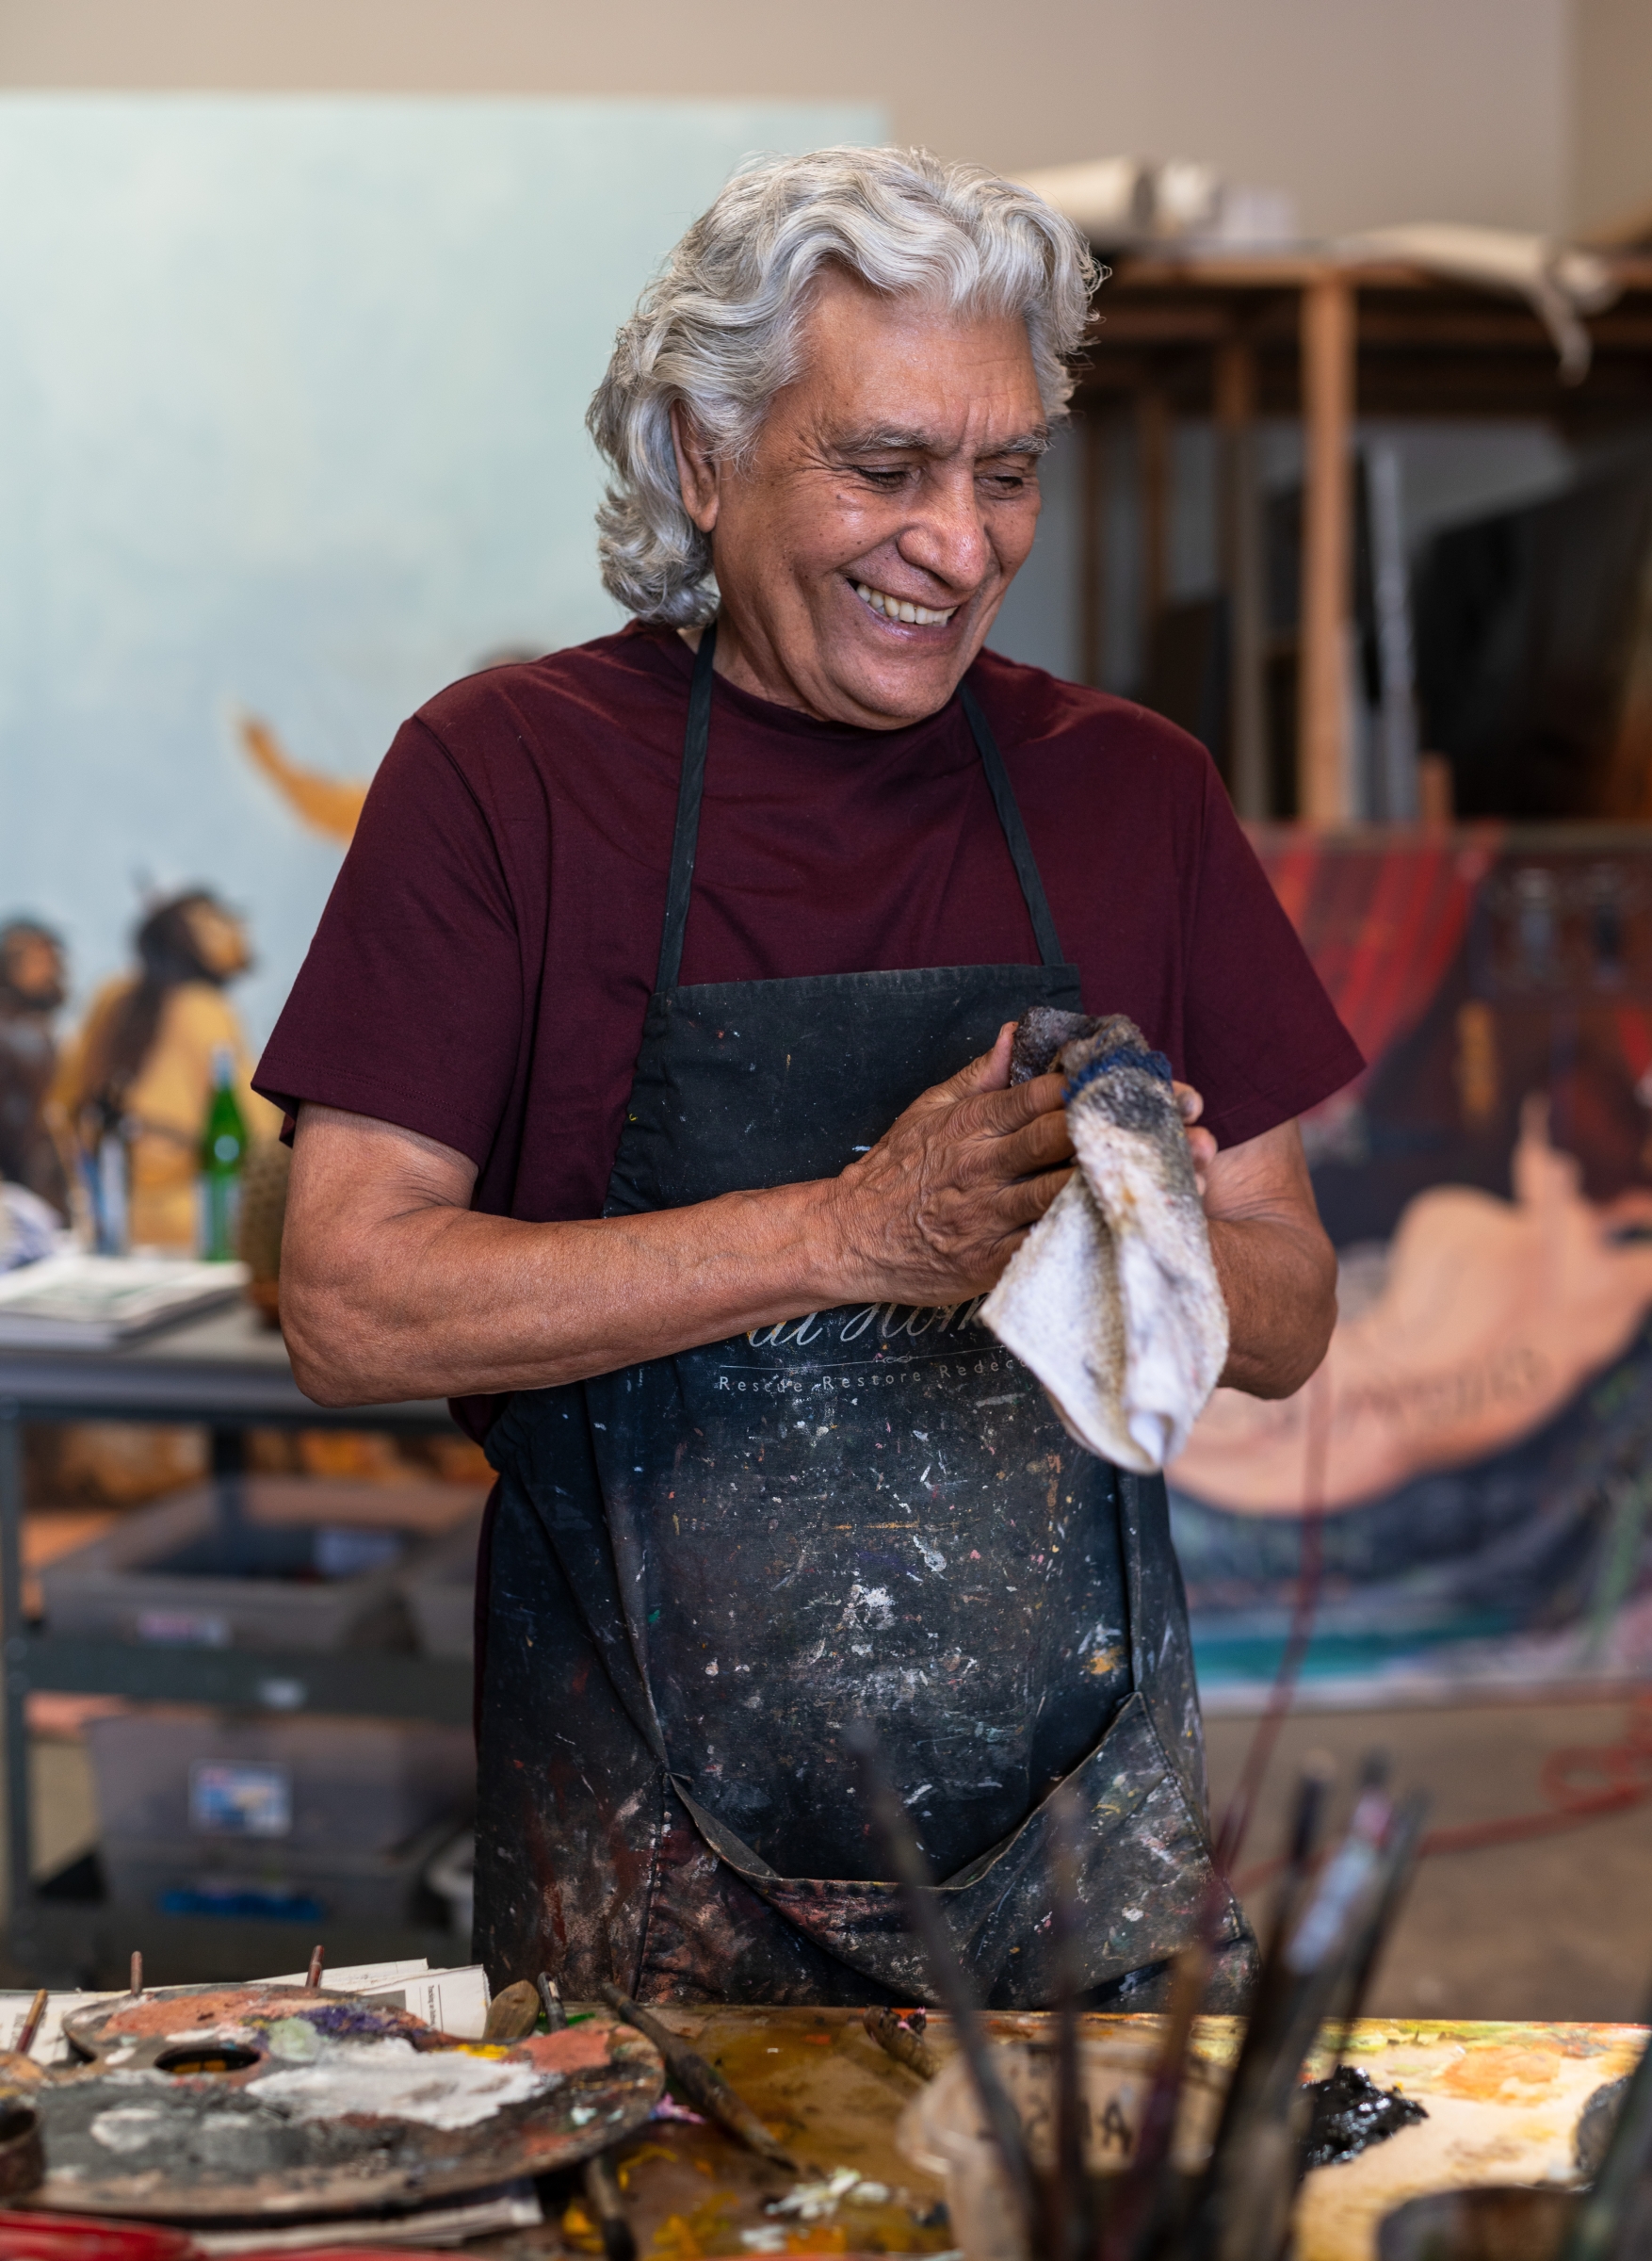 Raul Guerrero at his studio in National City, California,&amp;nbsp;2021
&amp;nbsp;